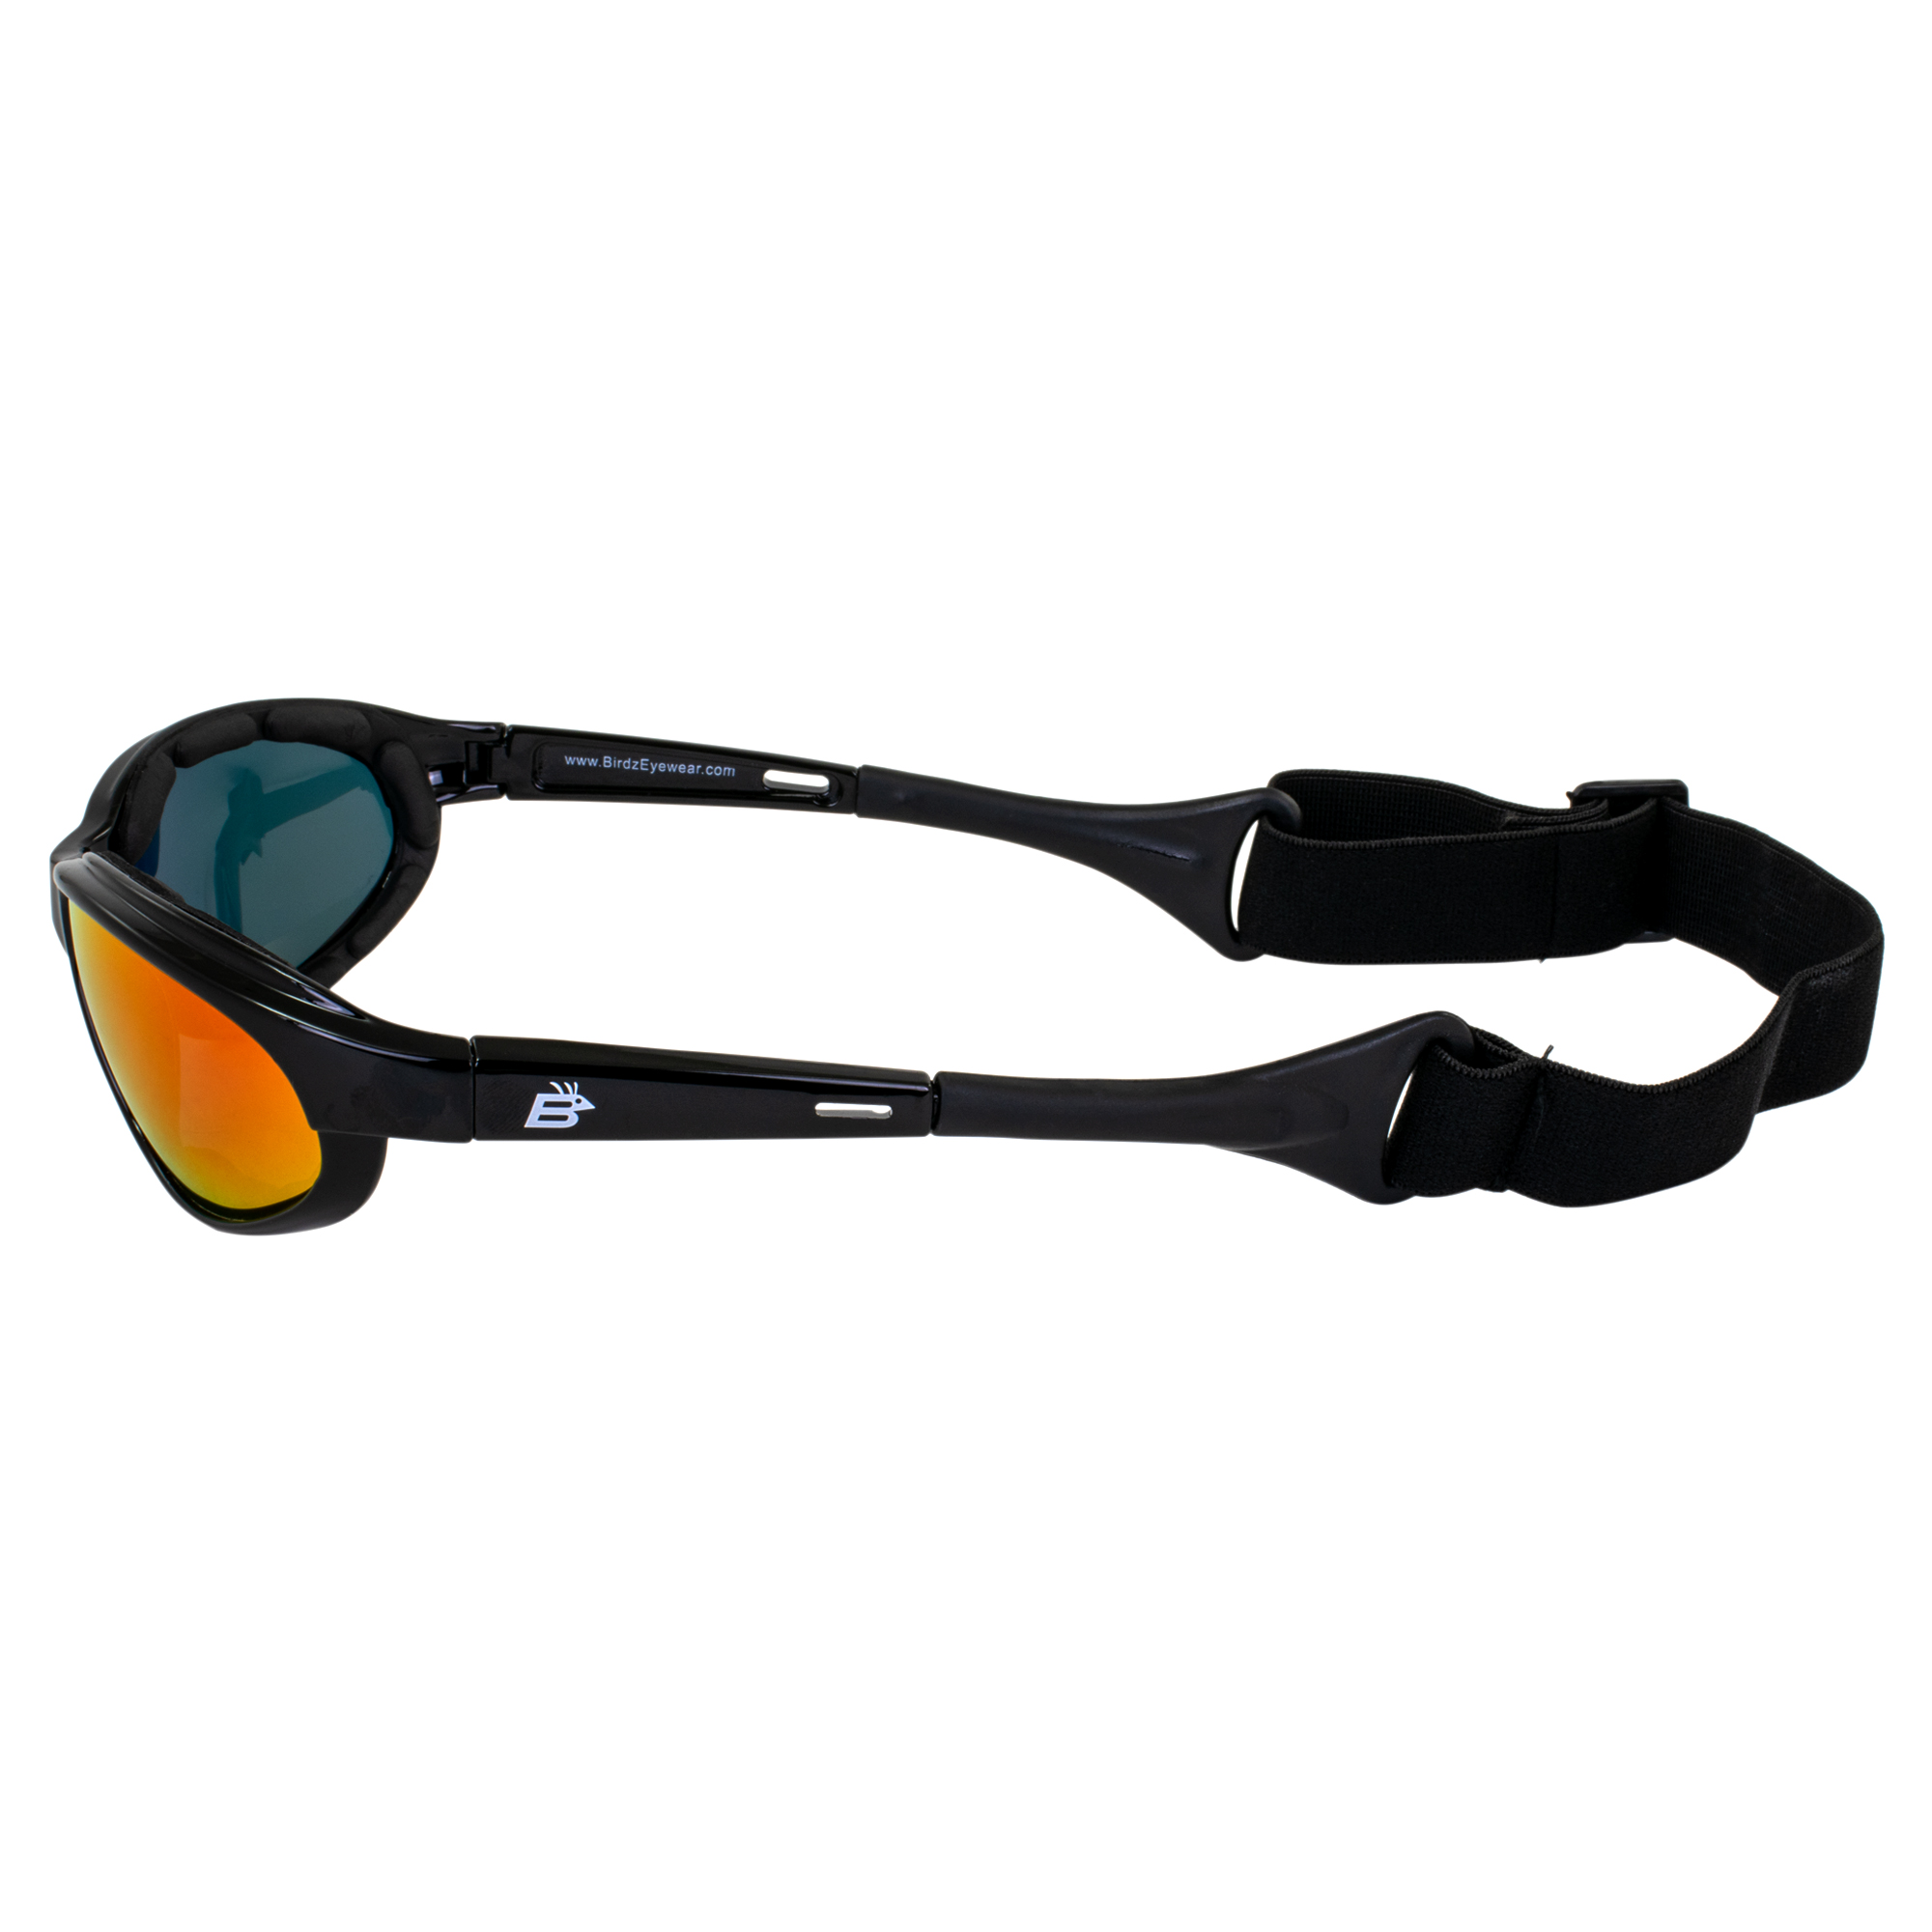 Birdz Eyewear Sail Padded Jetski Sunglasses Goggles Polarized Sports Watersports Boating Fishing for Men or Women 2 Pairs Black Frame w/Red & Green Mirror Lenses - image 3 of 7